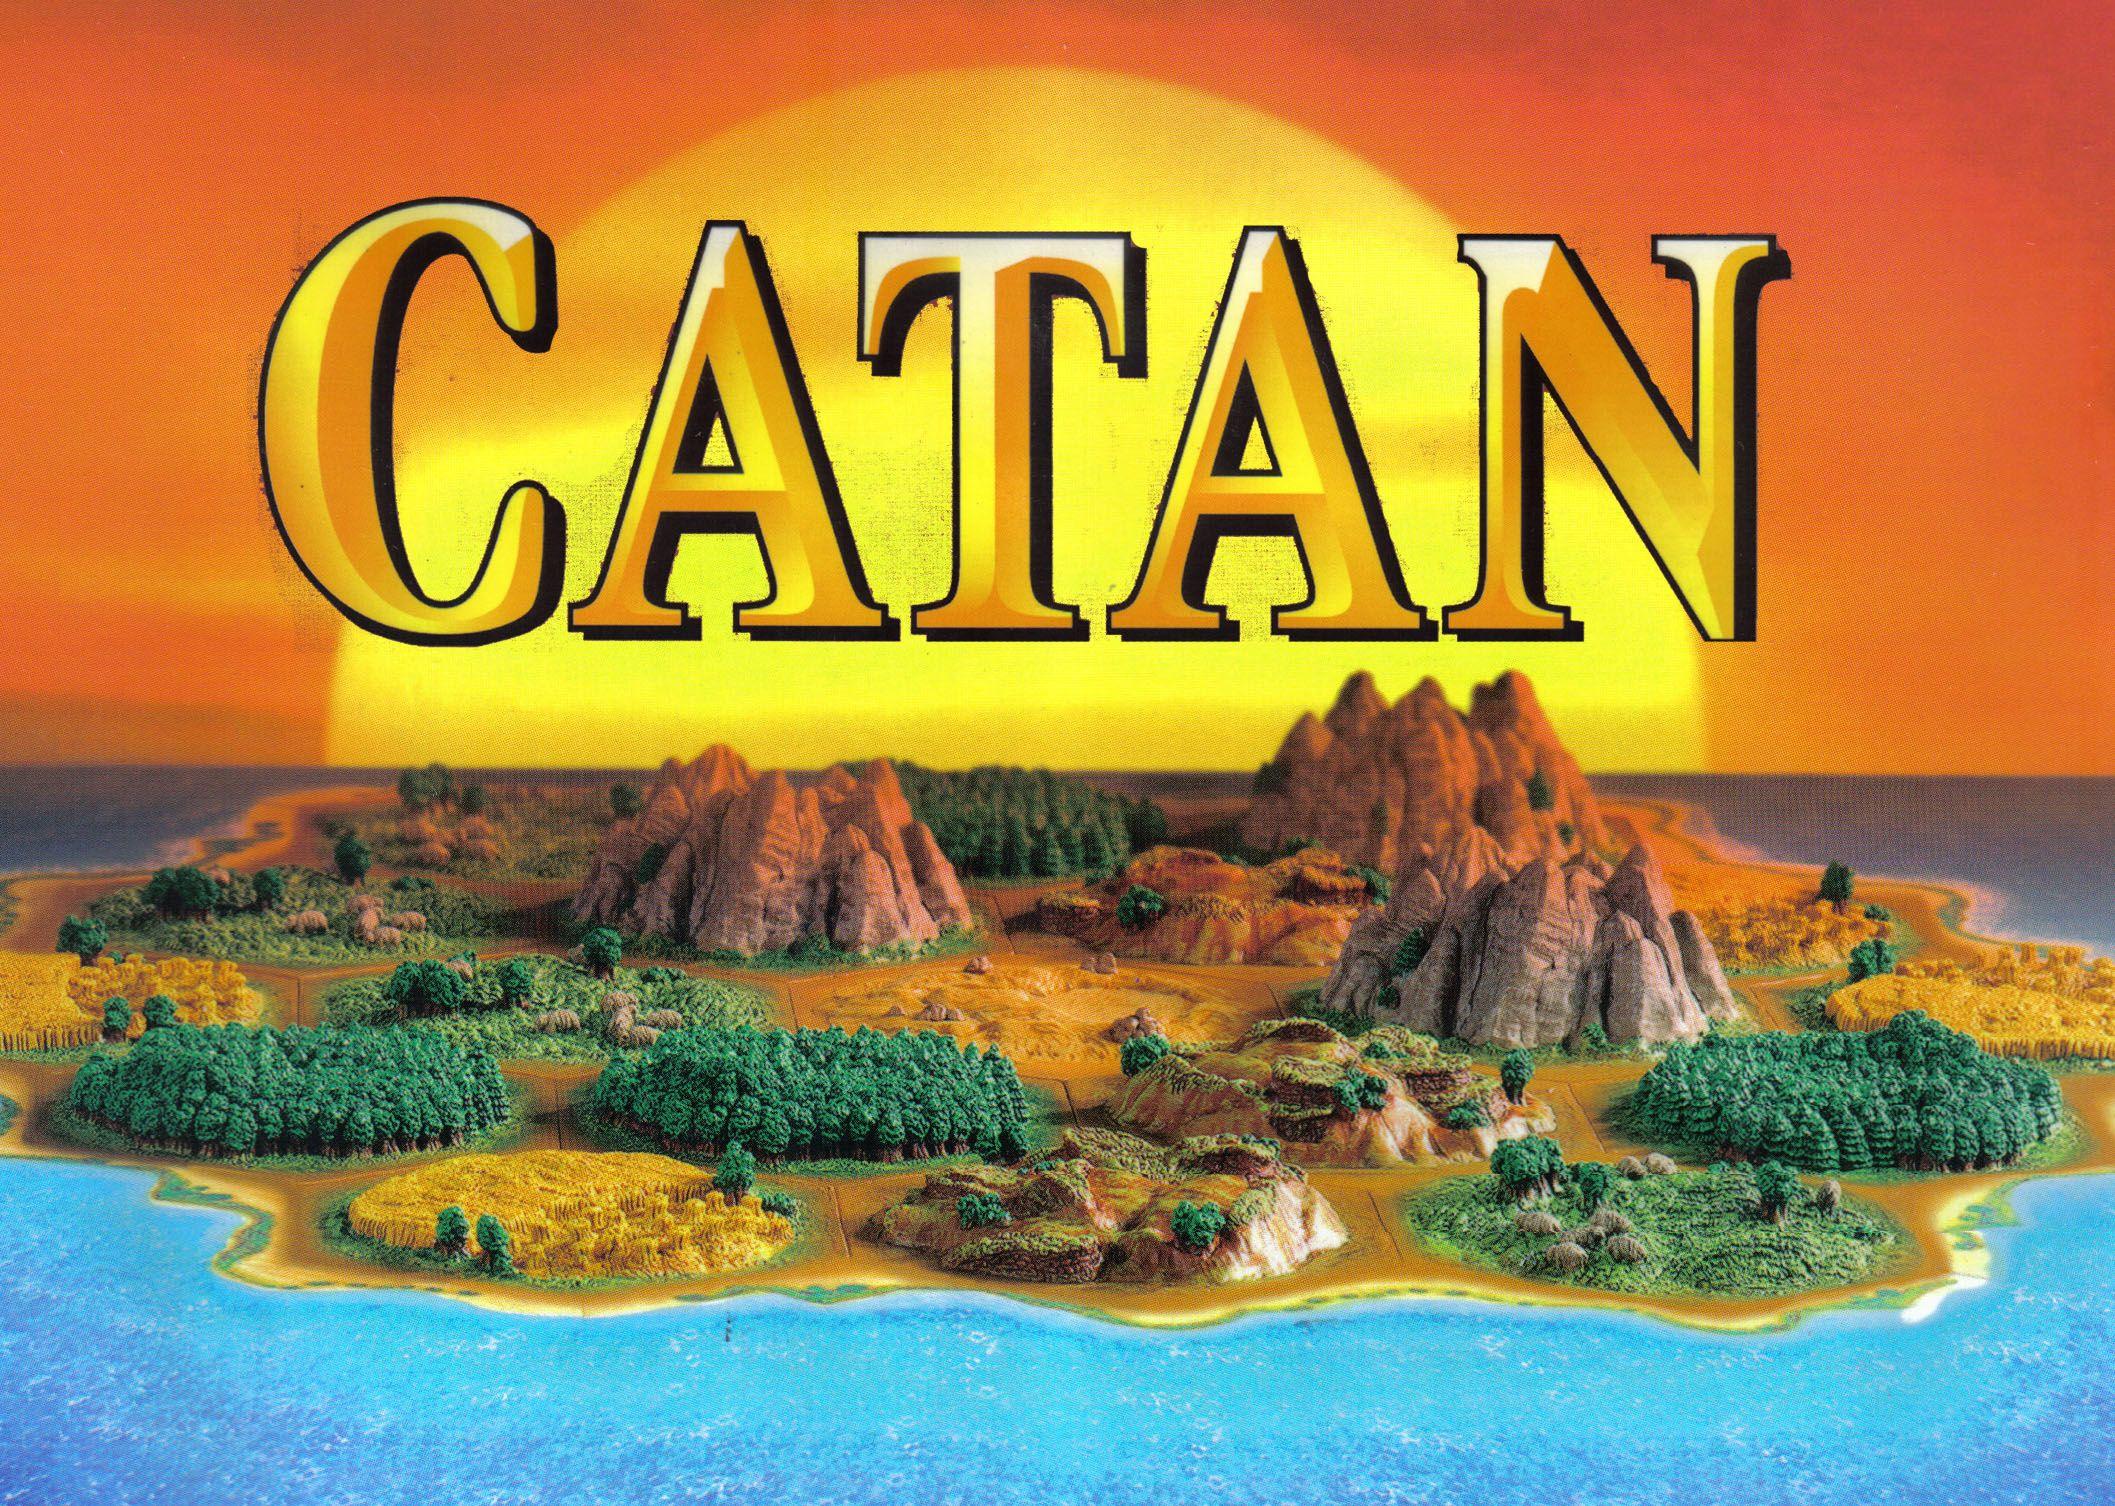 Catan Logo - Catan Kastle Online